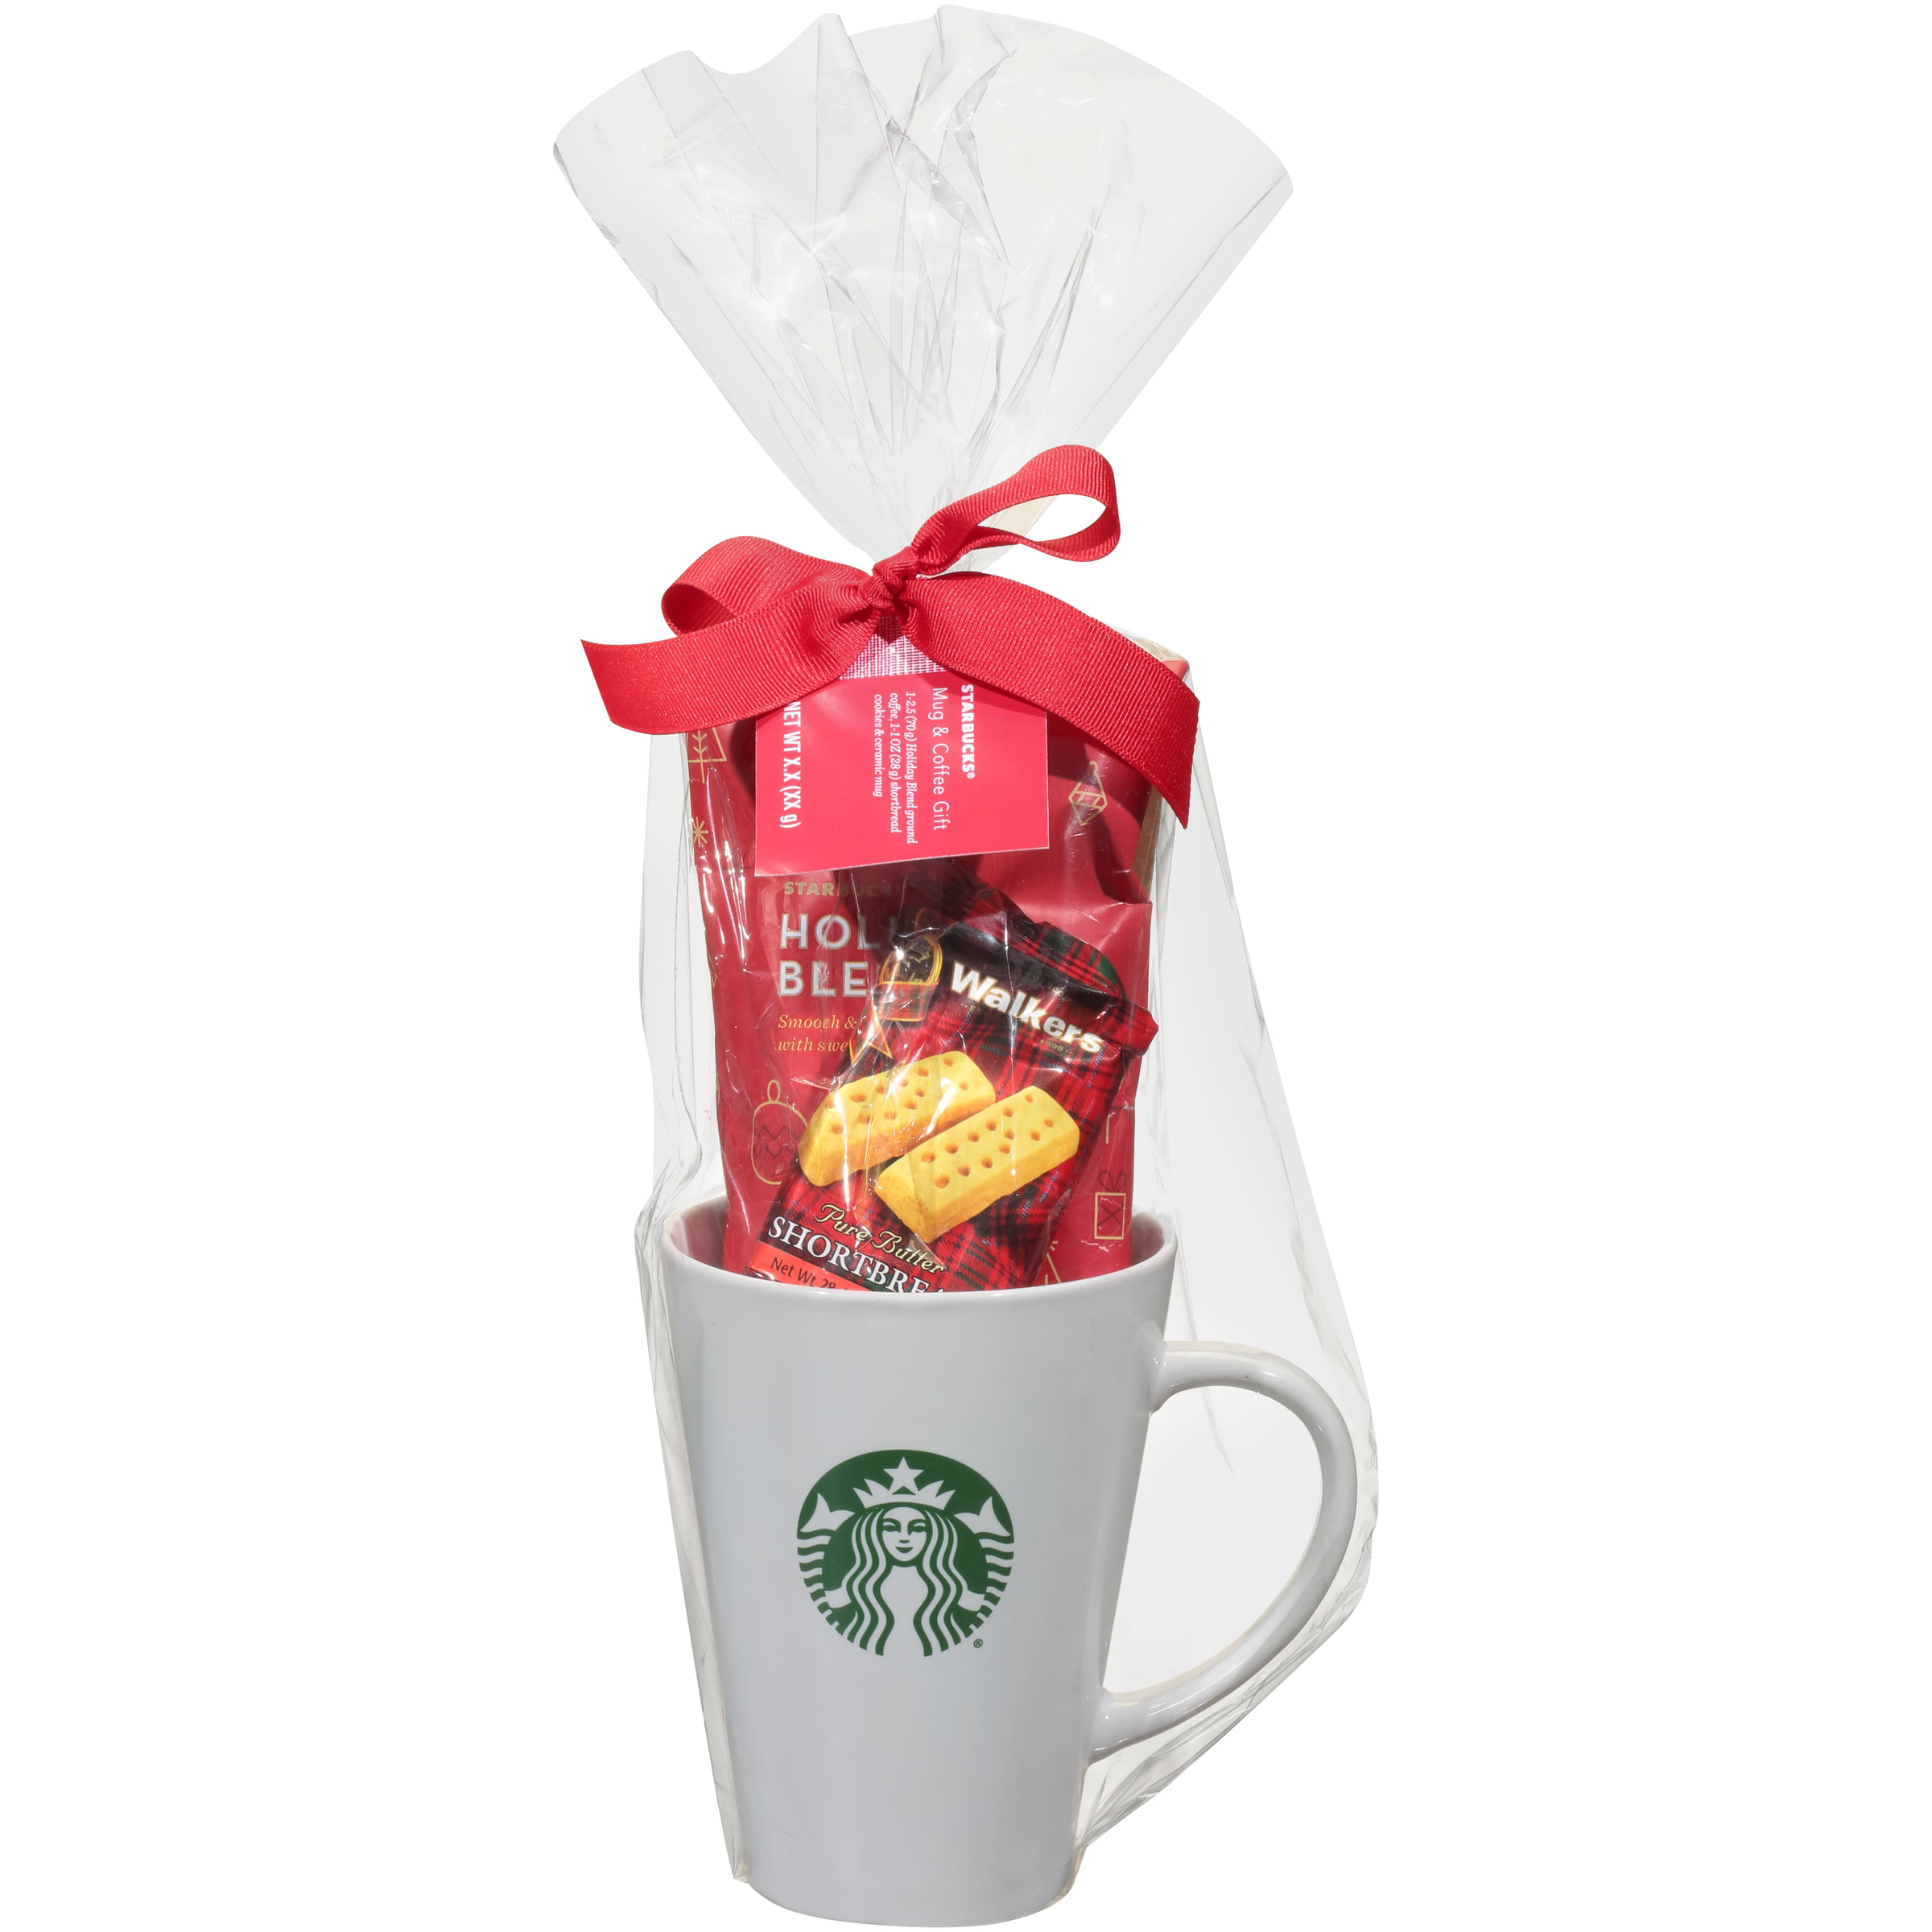 Starbucks Coffee Mug Gift Set Starbucks Coffee Company